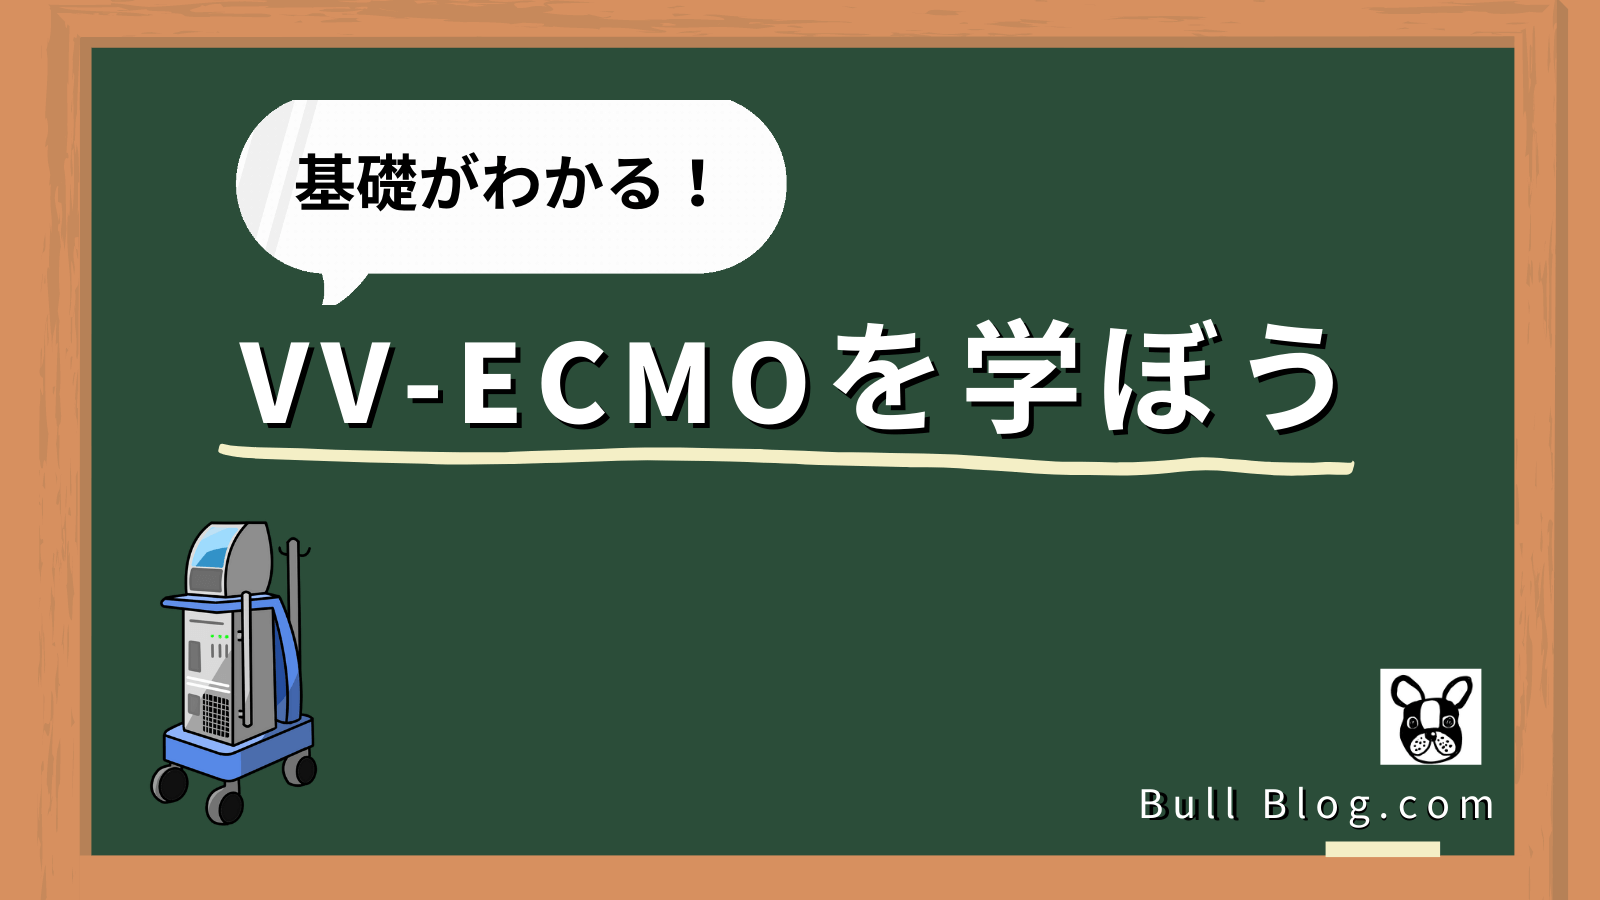 VV-ECMOを学ぼう